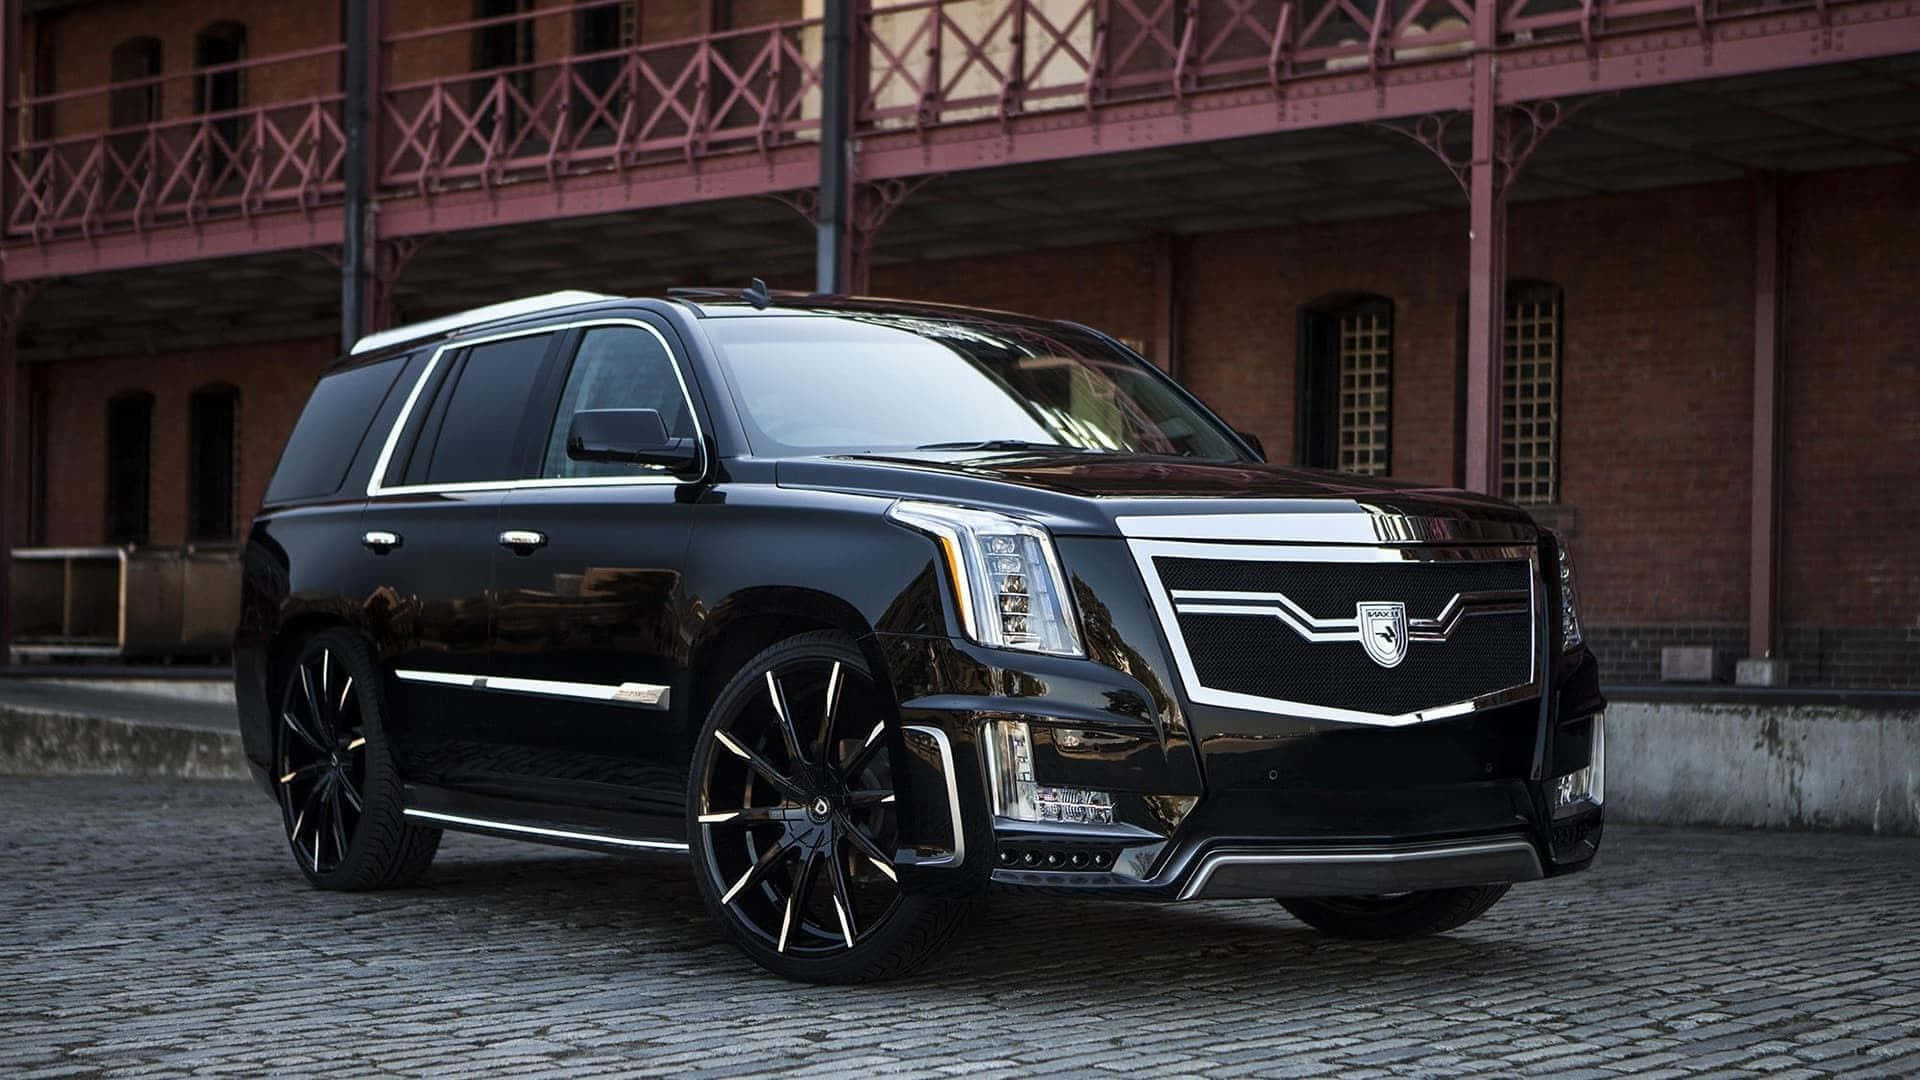 Stunning Cadillac Escalade in a Striking Urban Backdrop Wallpaper